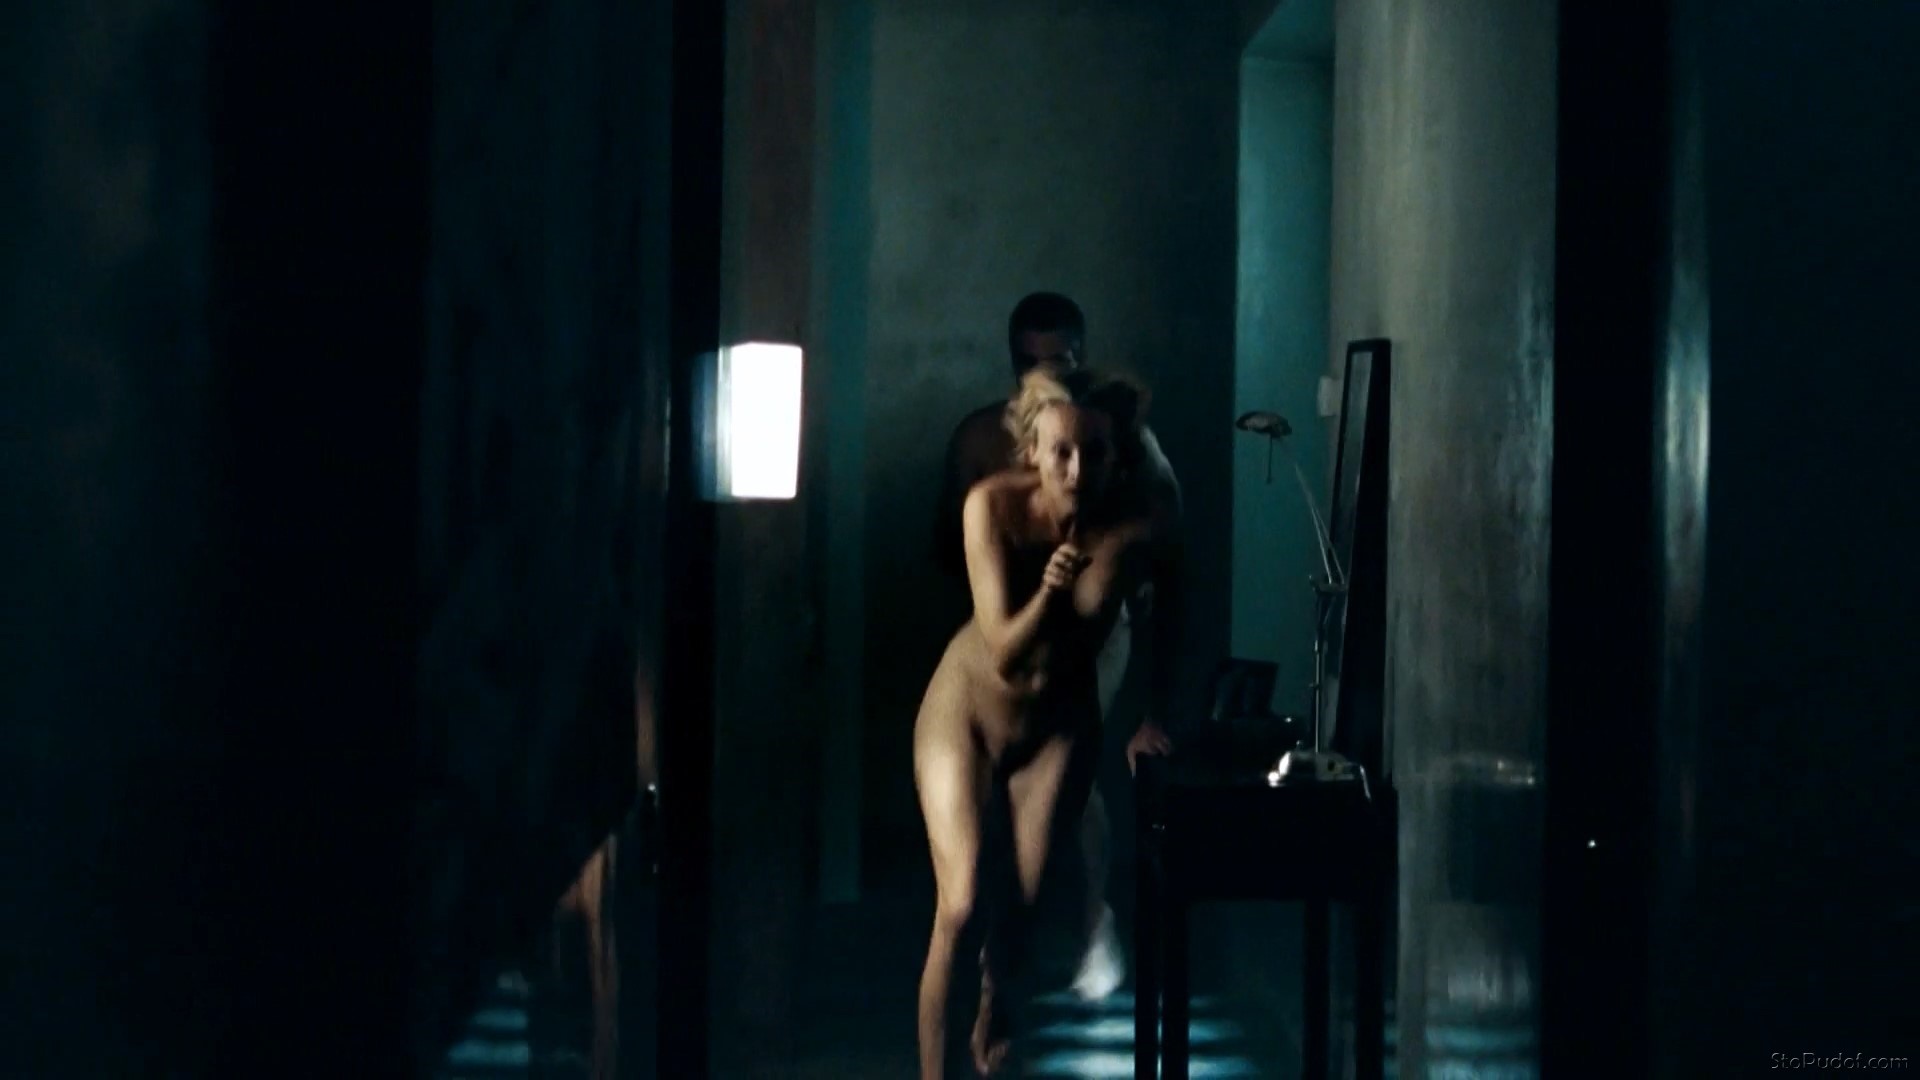 Diane Kruger nude photo leak uncensored - UkPhotoSafari